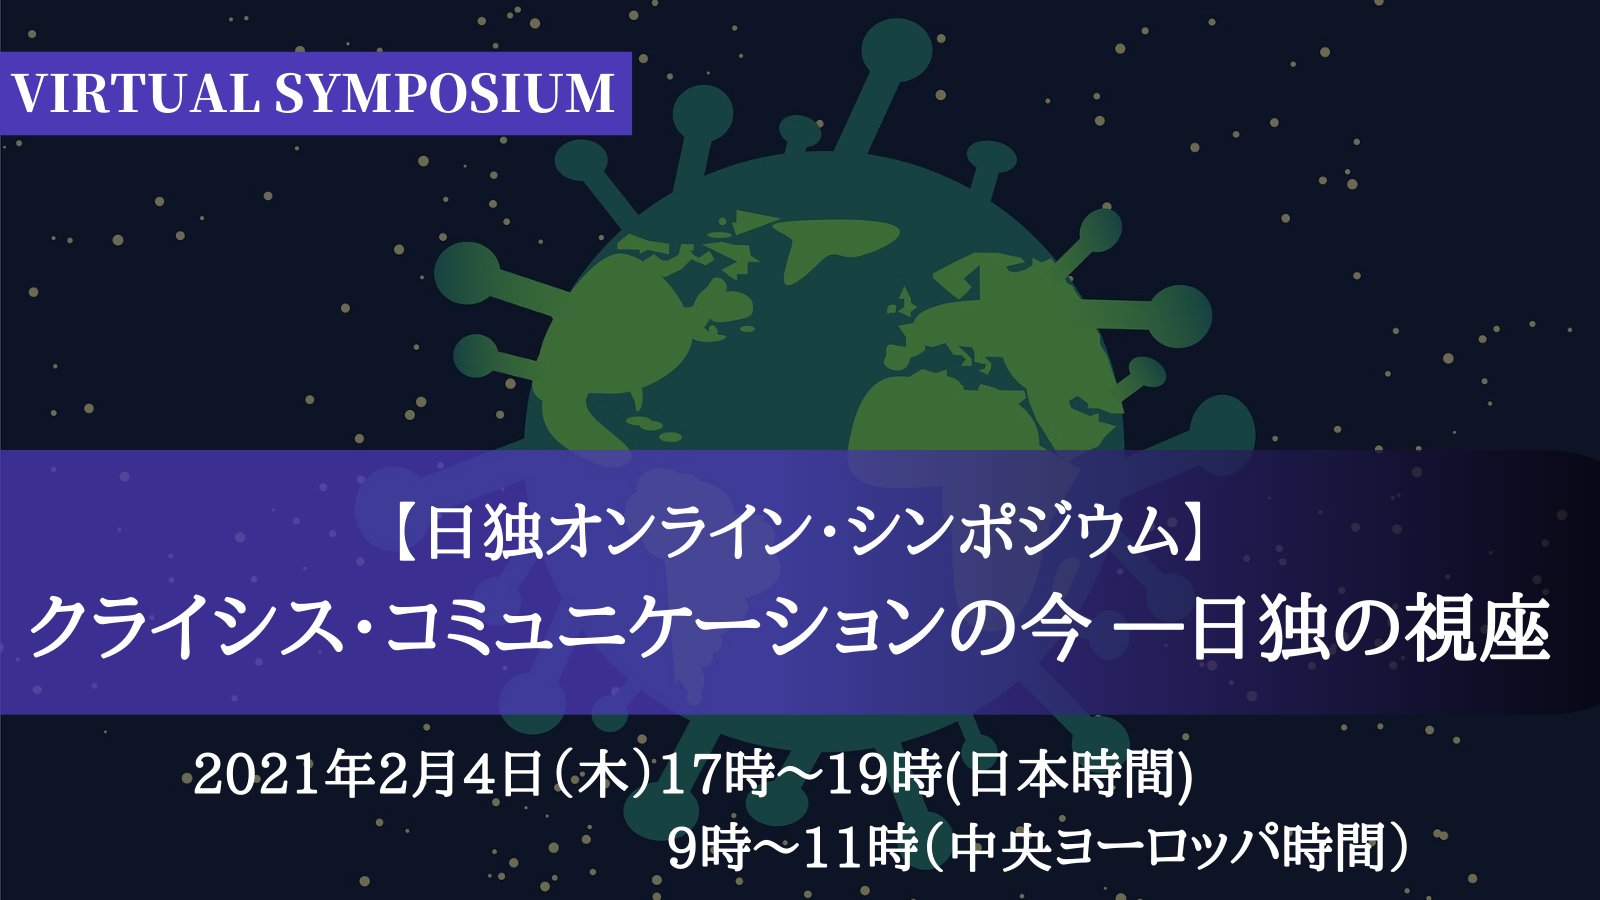 Virtual Symposium日独オンライン・シンポジウム「クライシス・コミュニケーションの今―日独の視座」の広告